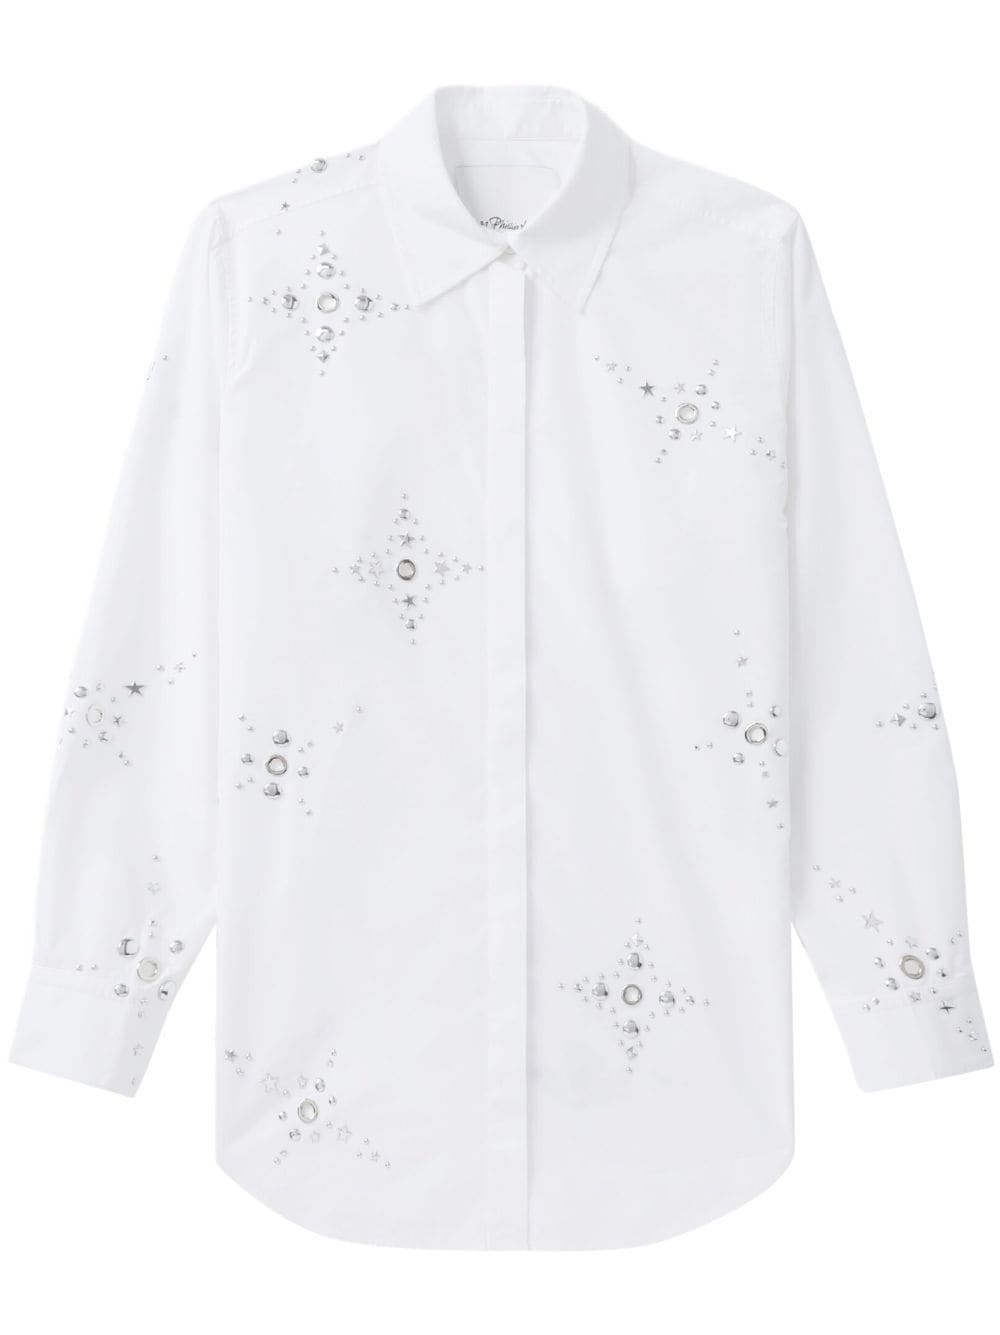 3.1 Phillip Lim stud-embellished long-sleeve shirt - White von 3.1 Phillip Lim